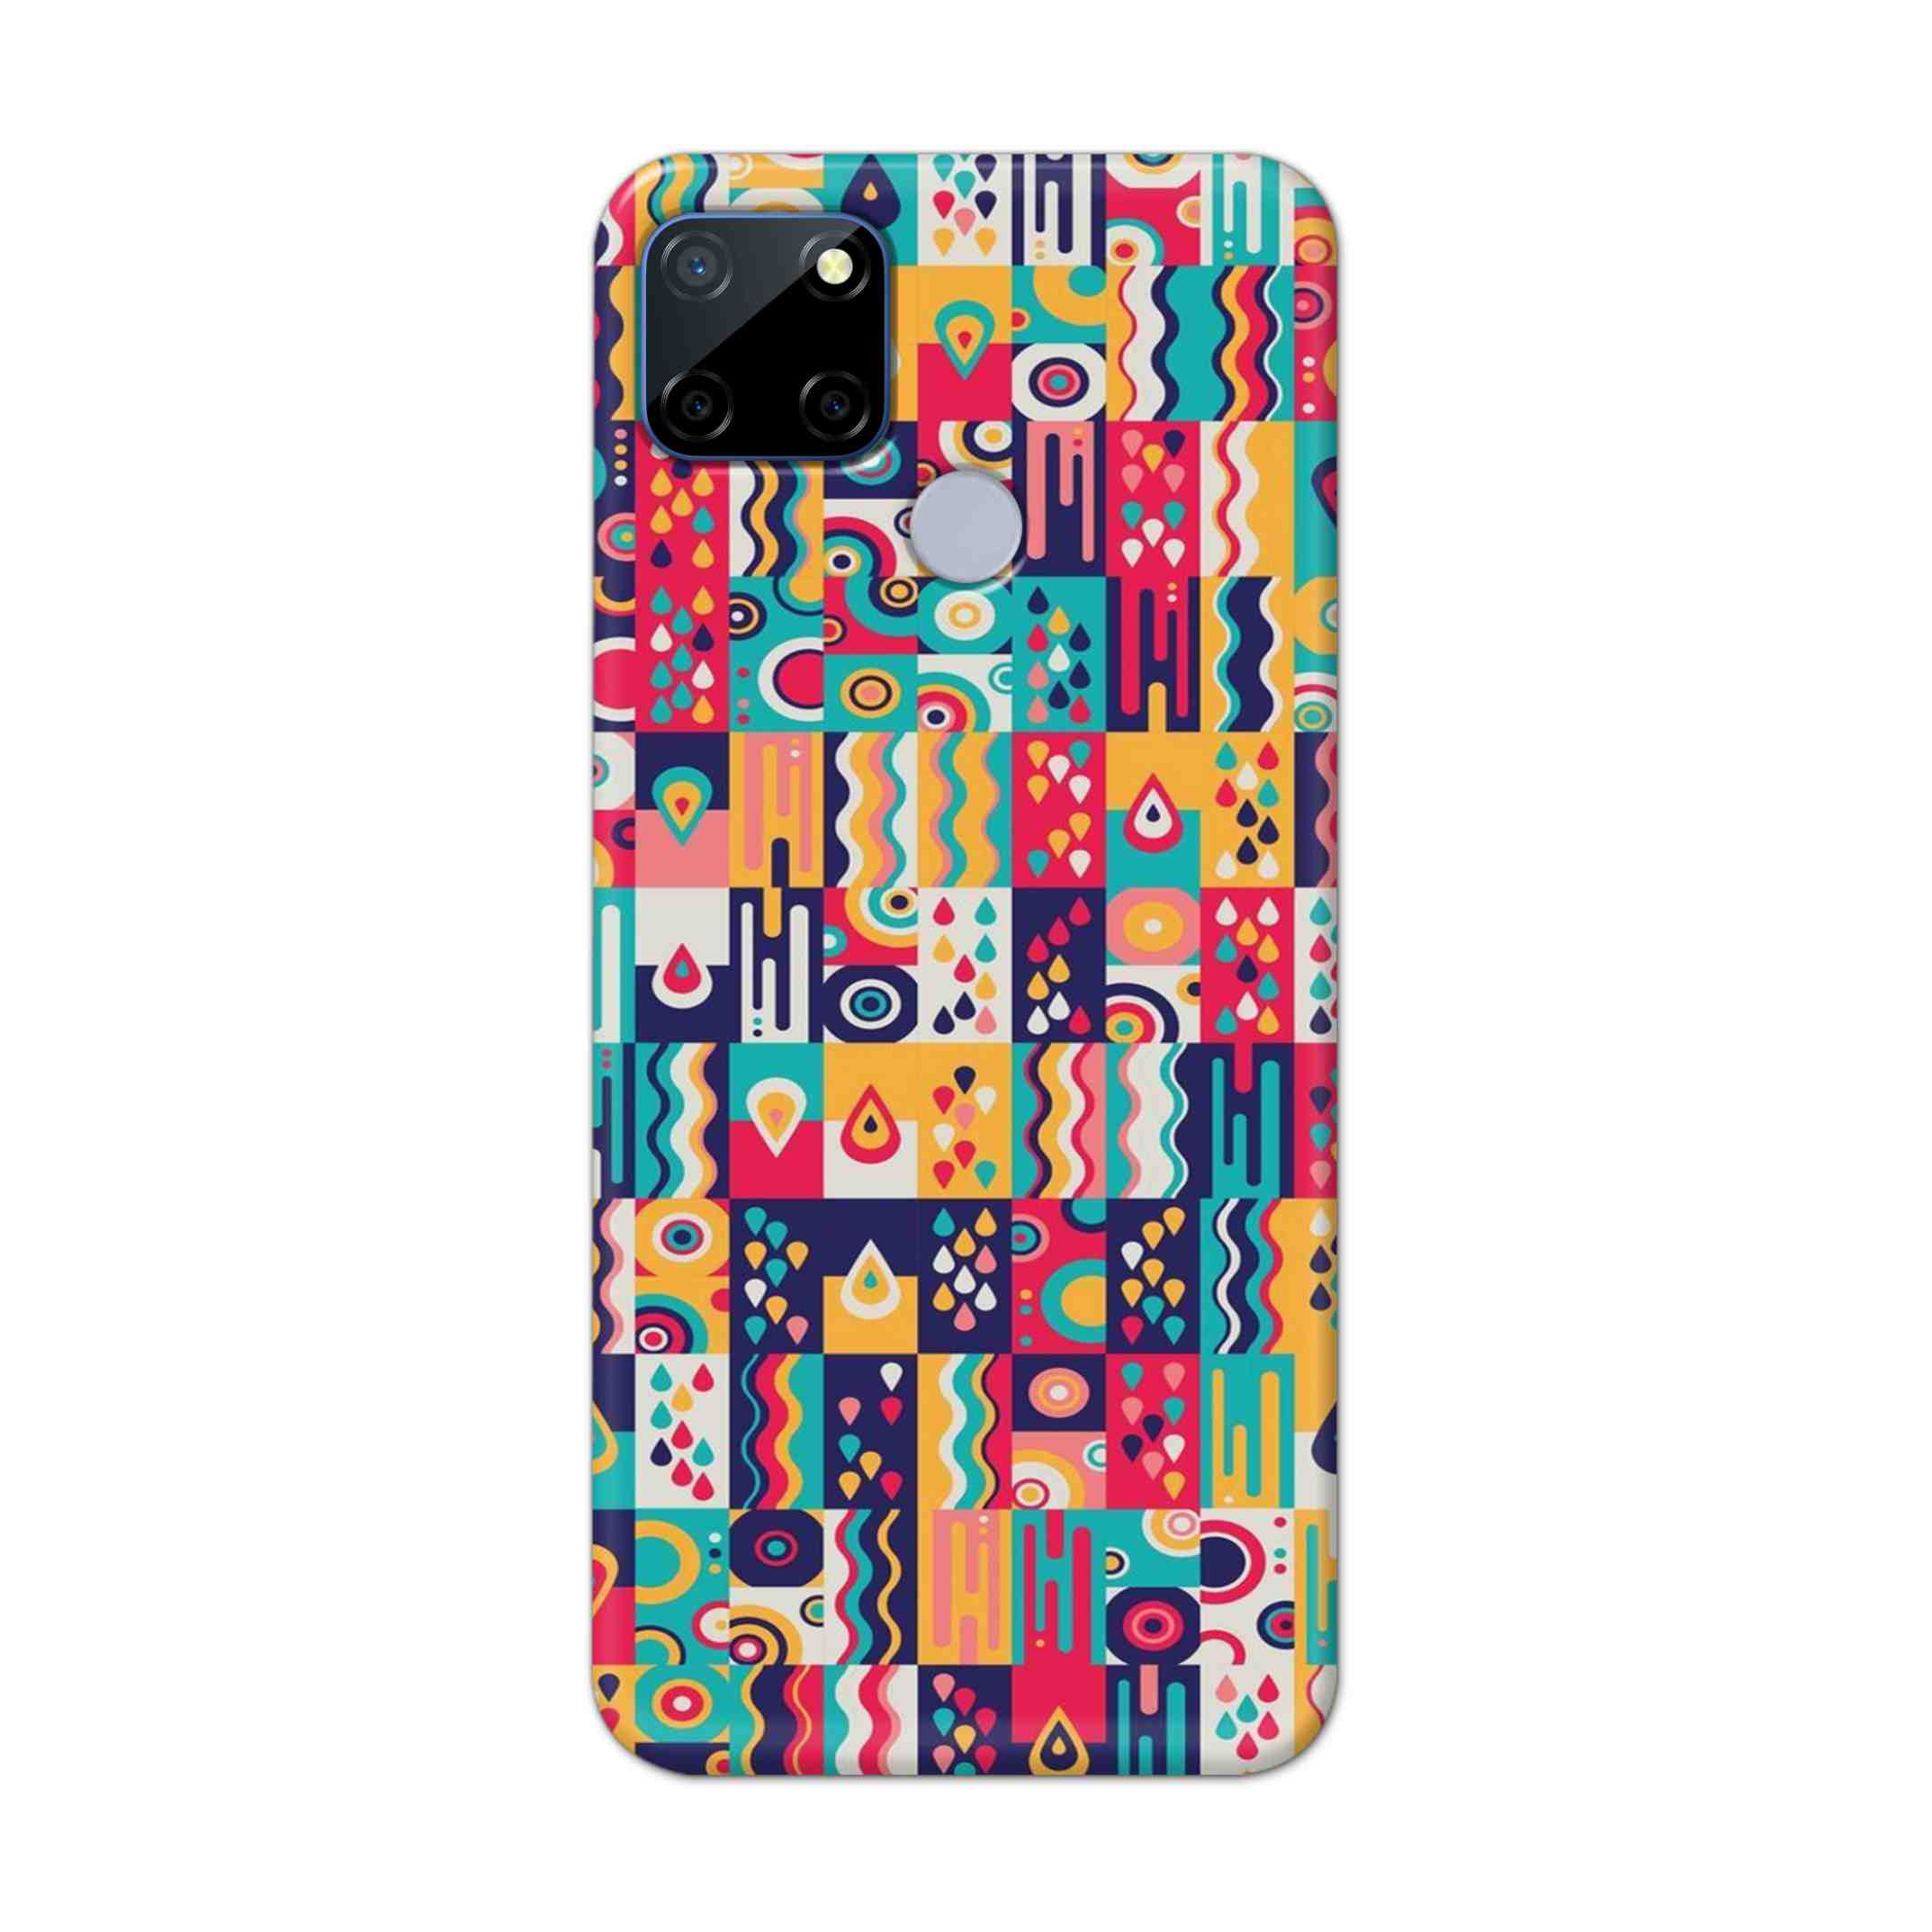 Buy Art Hard Back Mobile Phone Case Cover For Realme C12 Online